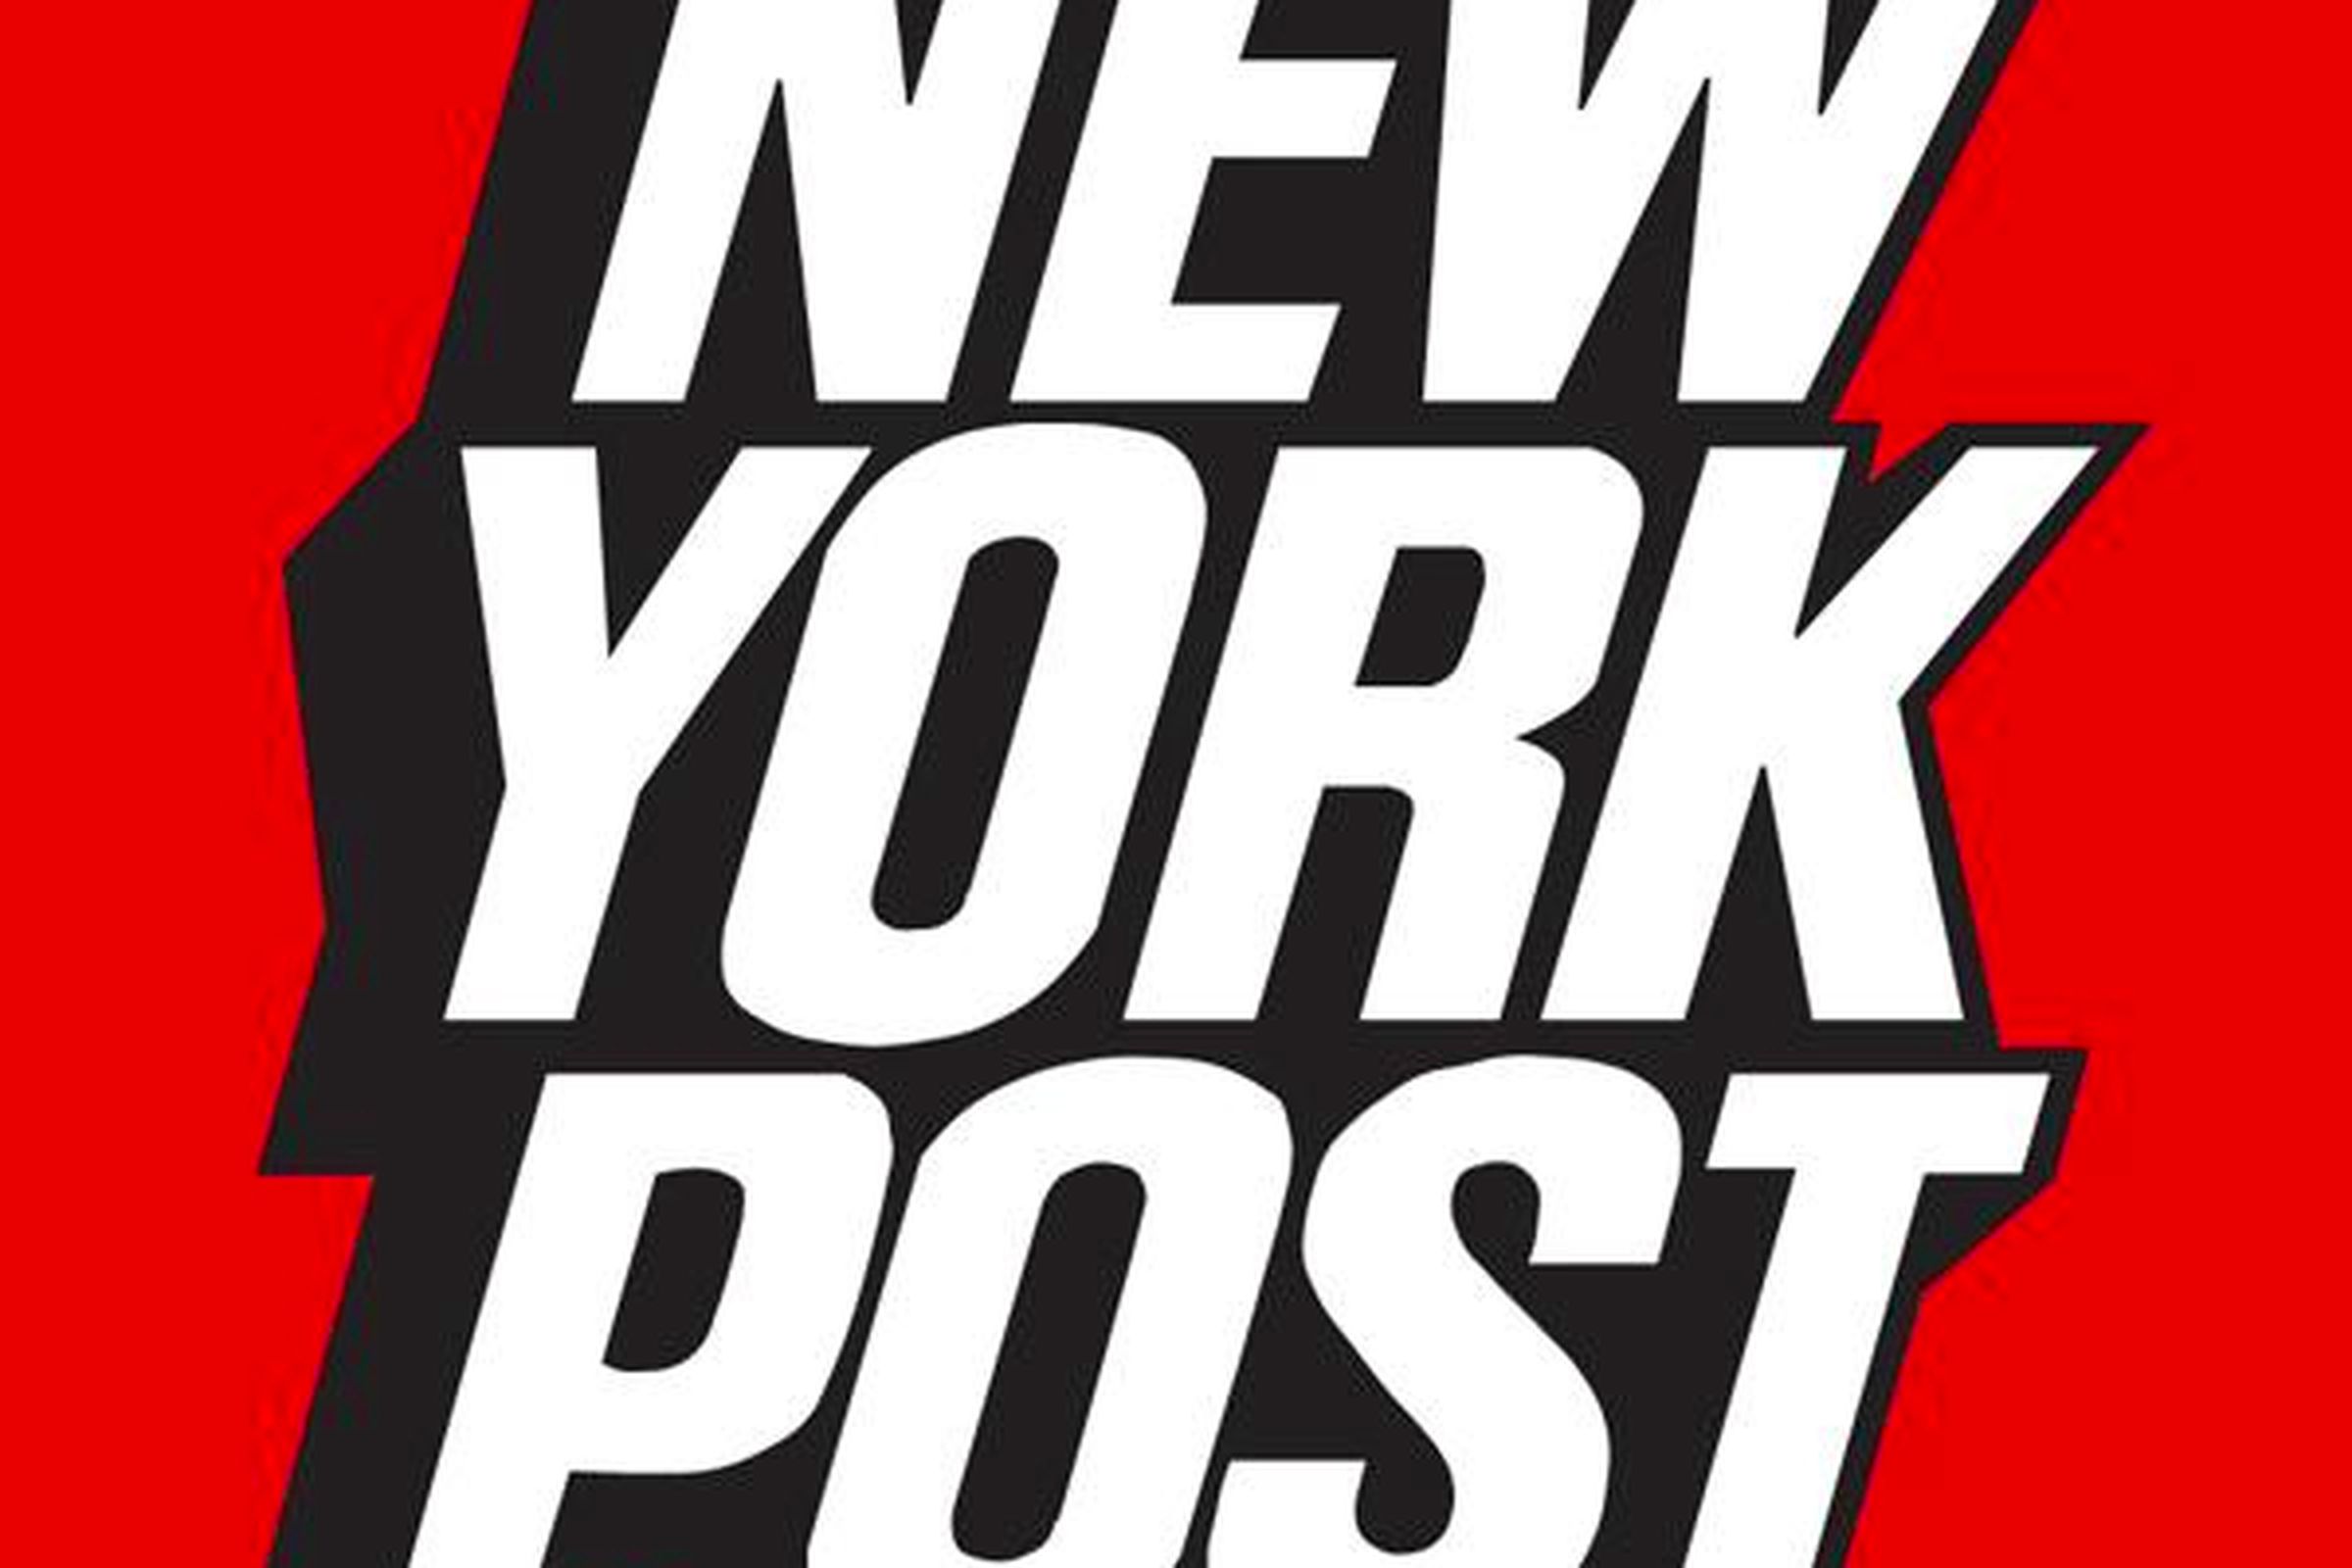 new york post